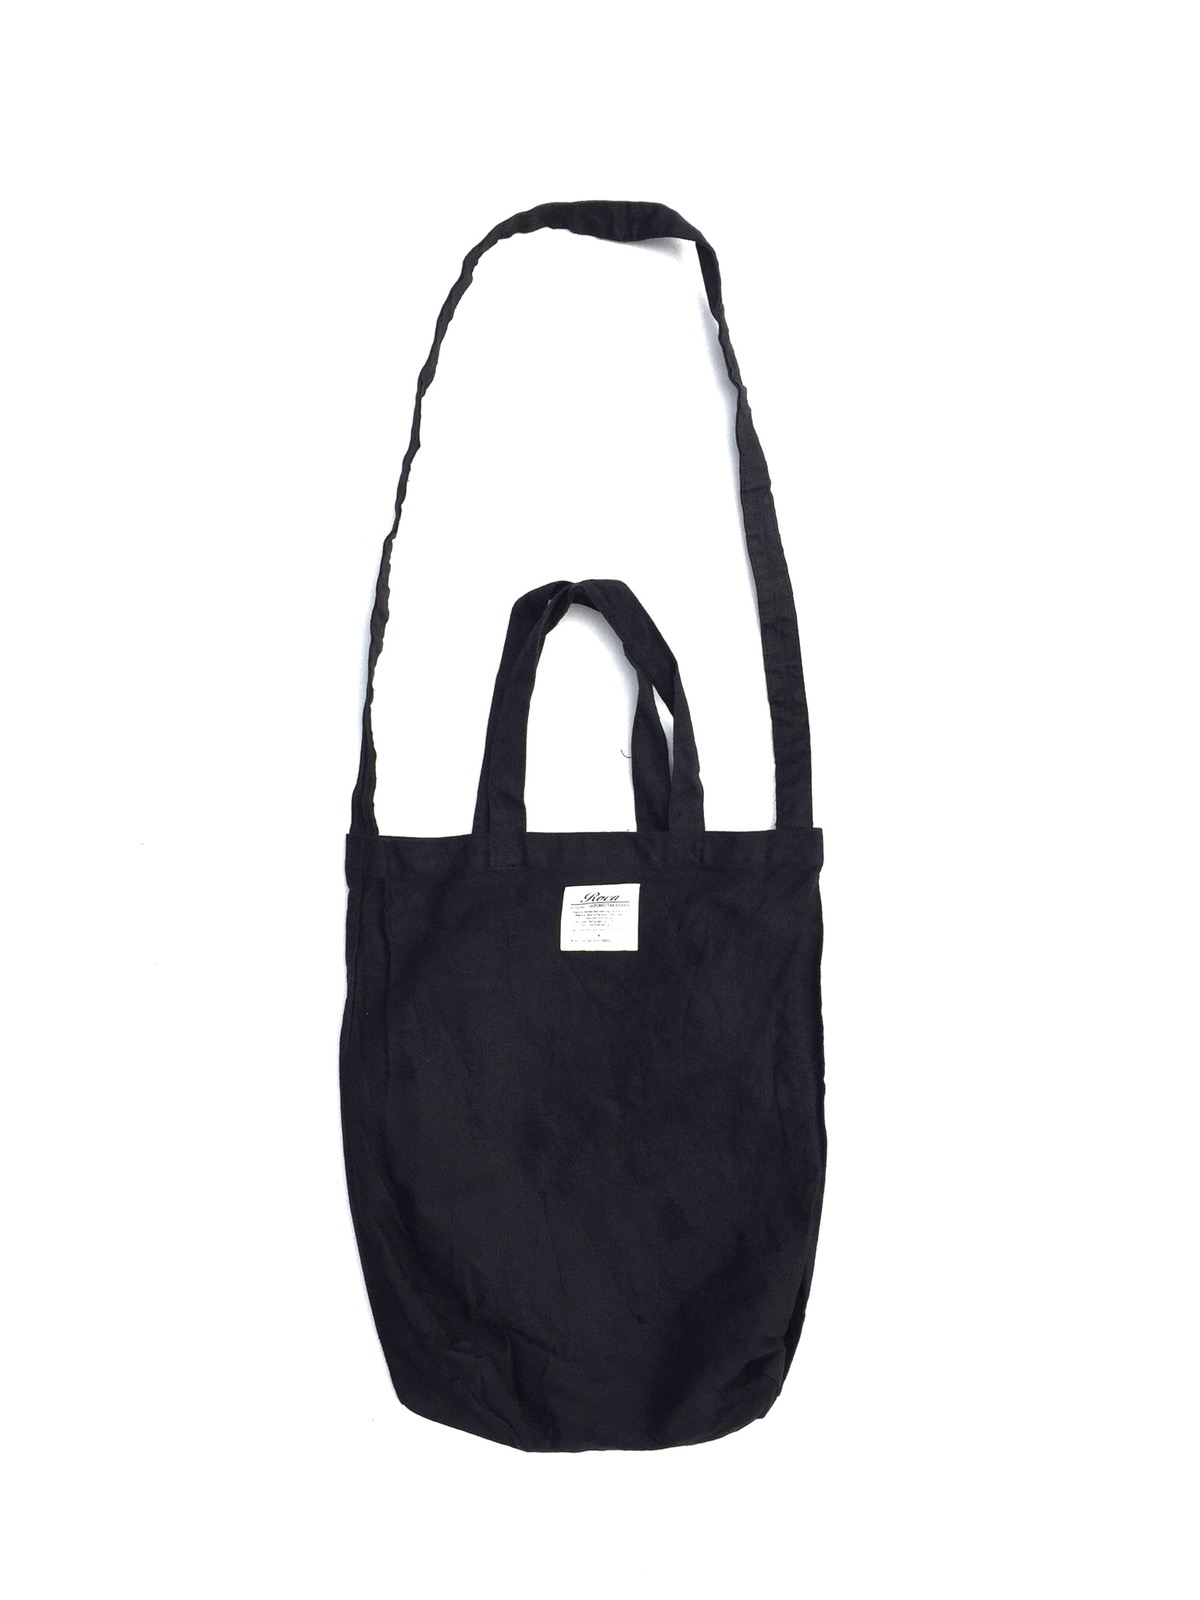 Japanese Brand Roen Tote Sling Bag - 2